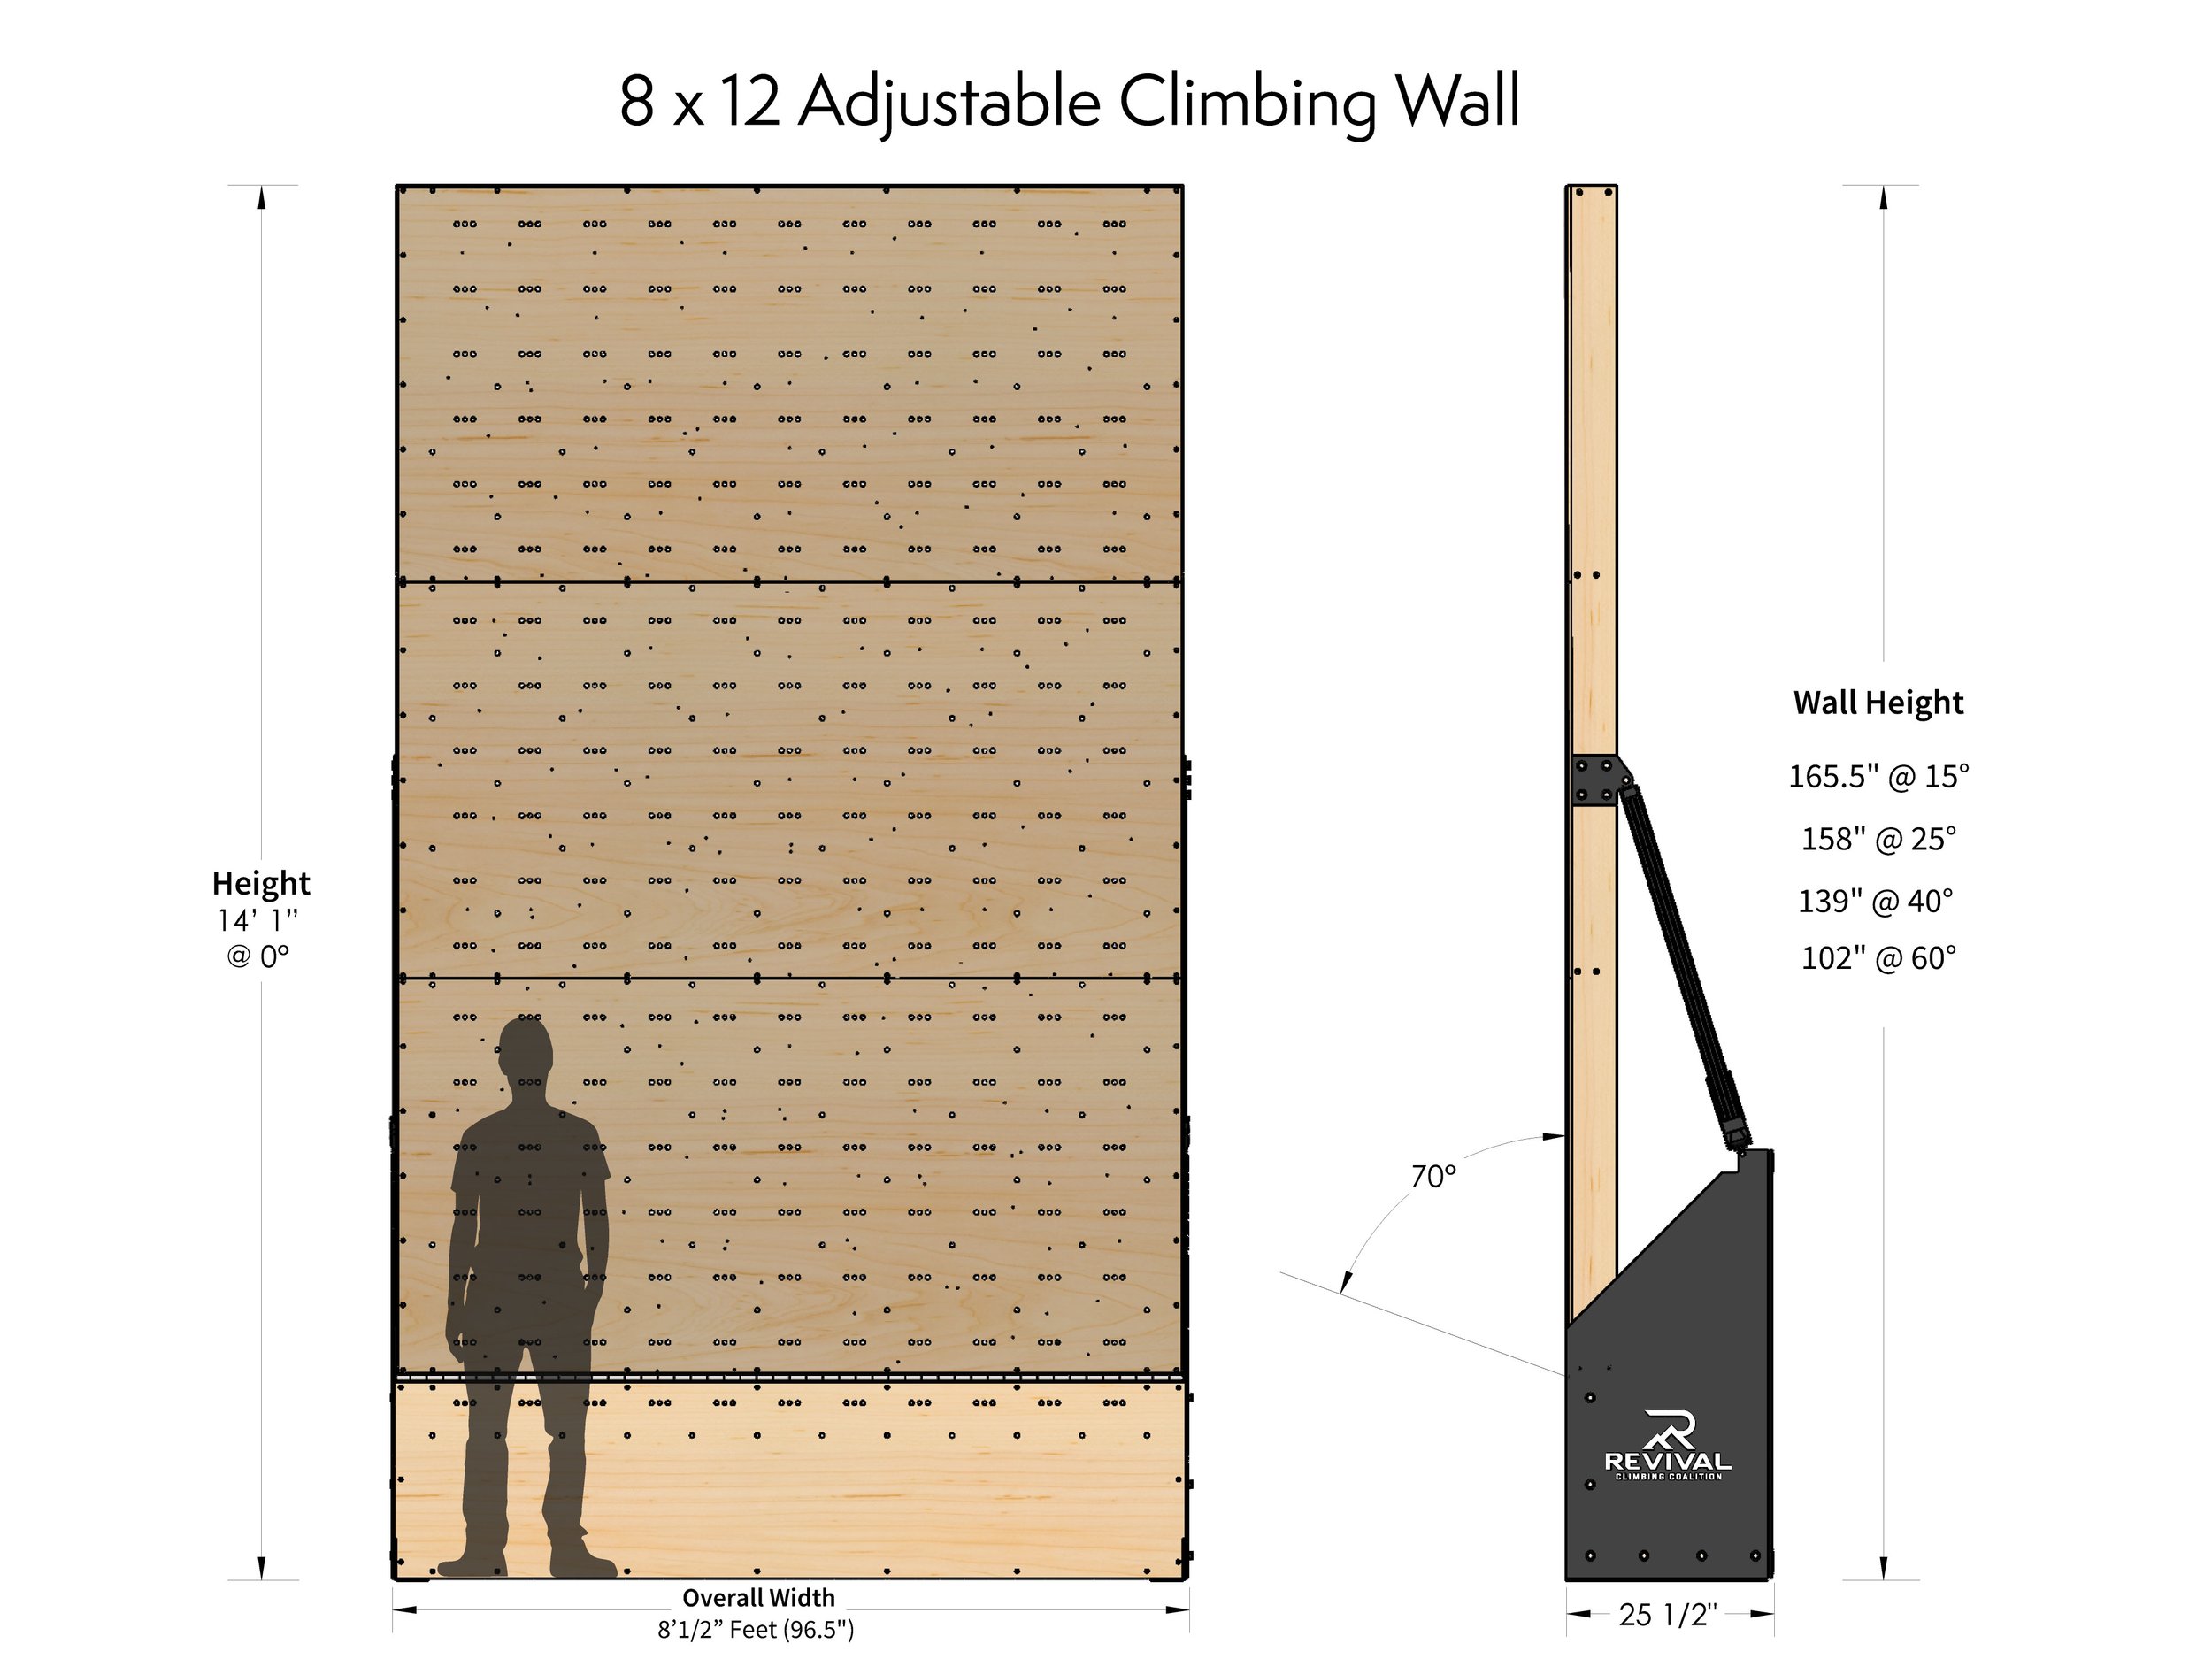 Revival-Climbing-Adjustable-Wall_8x12_Dimensions_Web.jpg